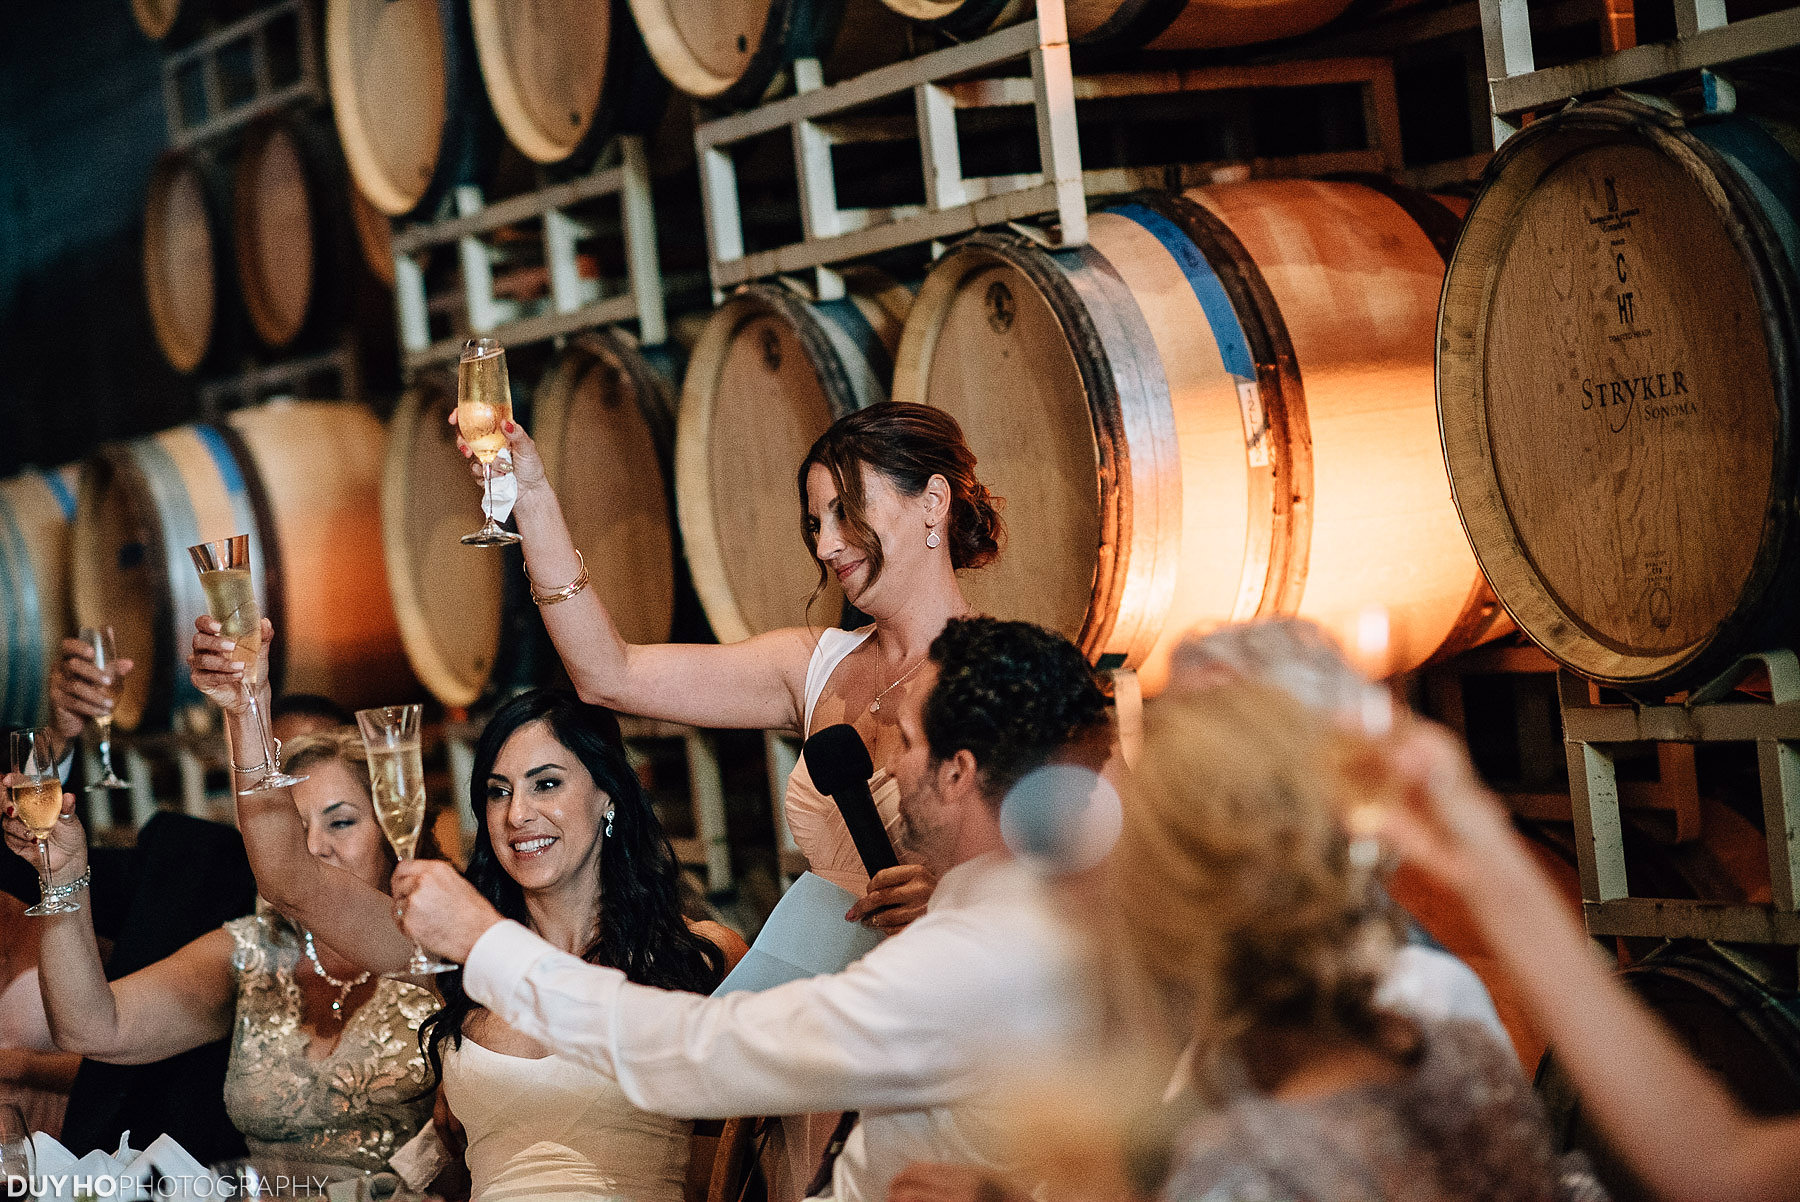 stryker sonoma winery barrel room wedding reception photo